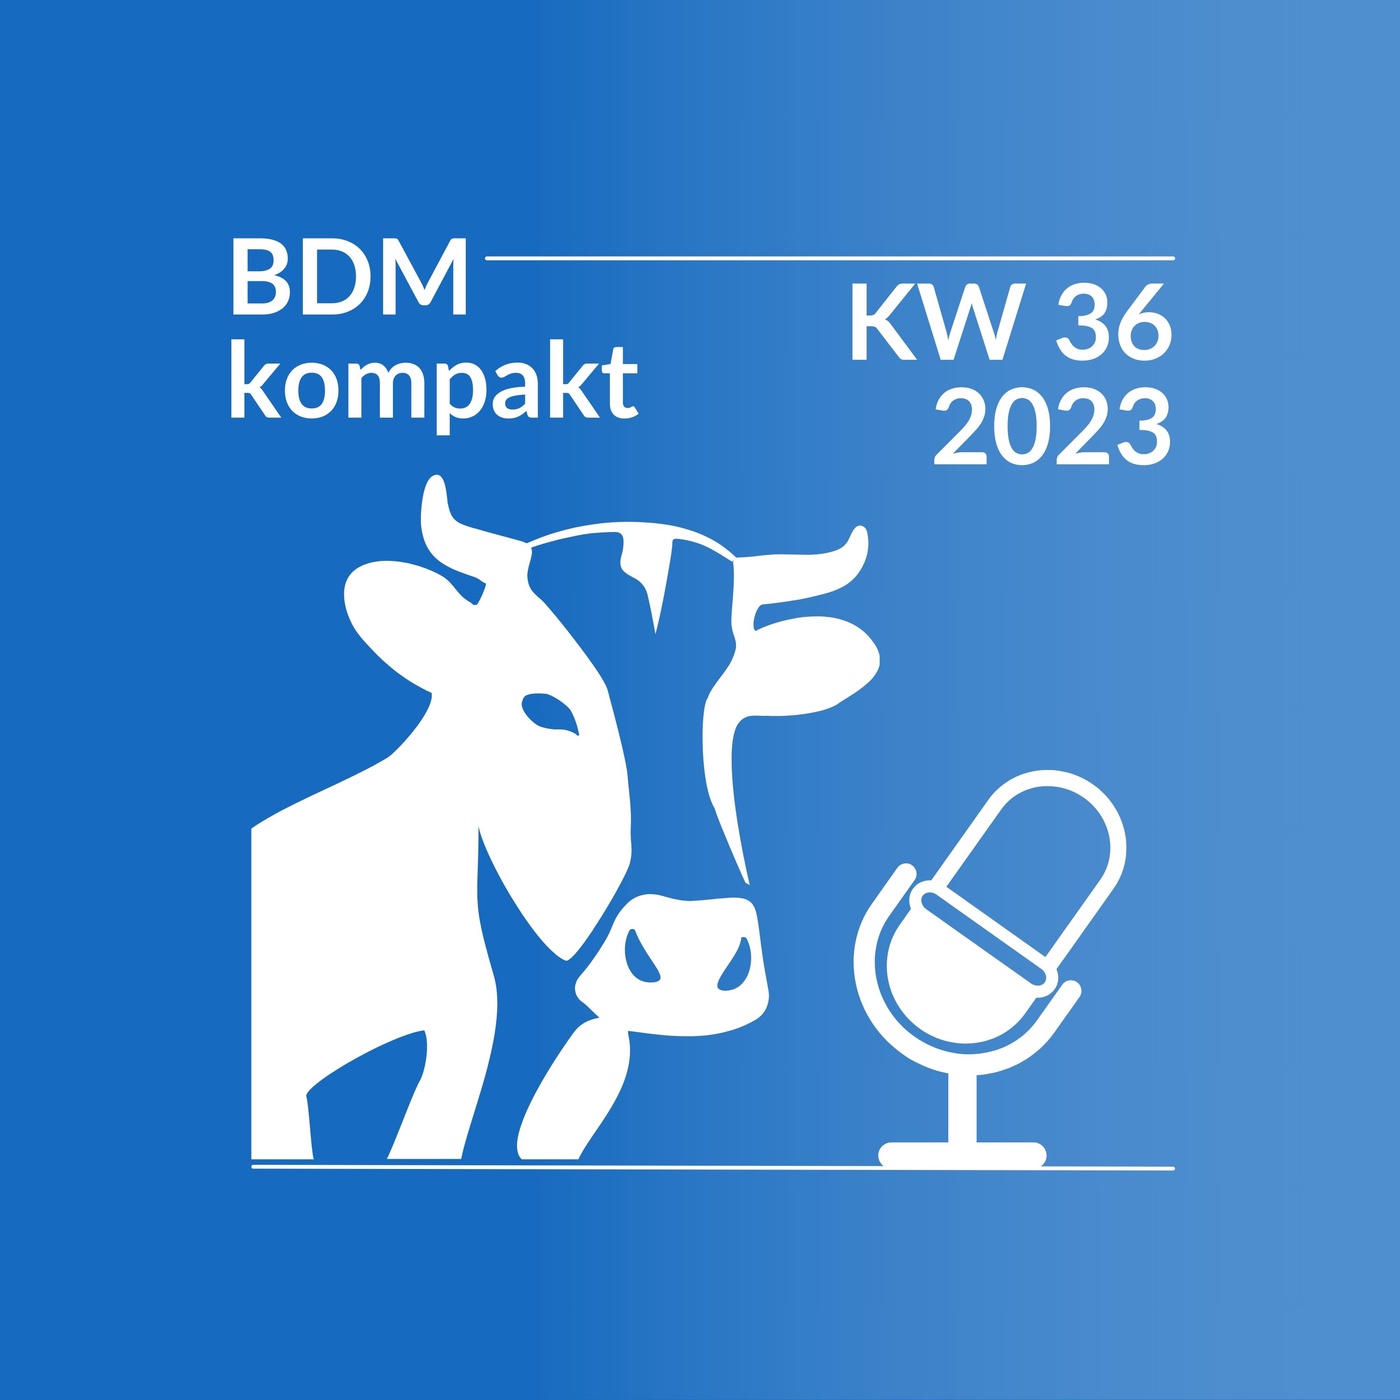 BDM kompakt KW 36/2023